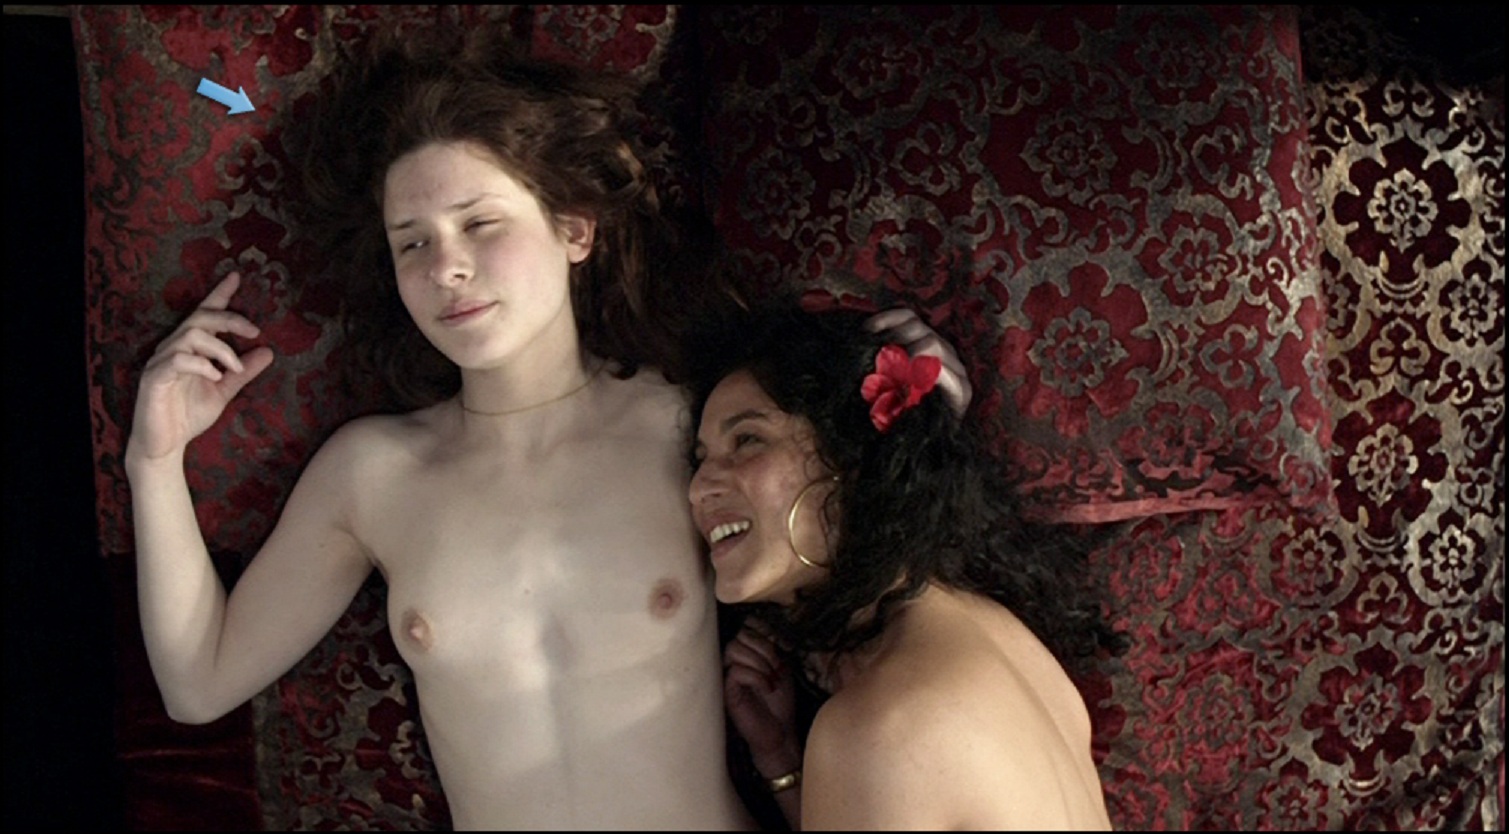 Naked Julia Artamonov In The Sleeping Beauty